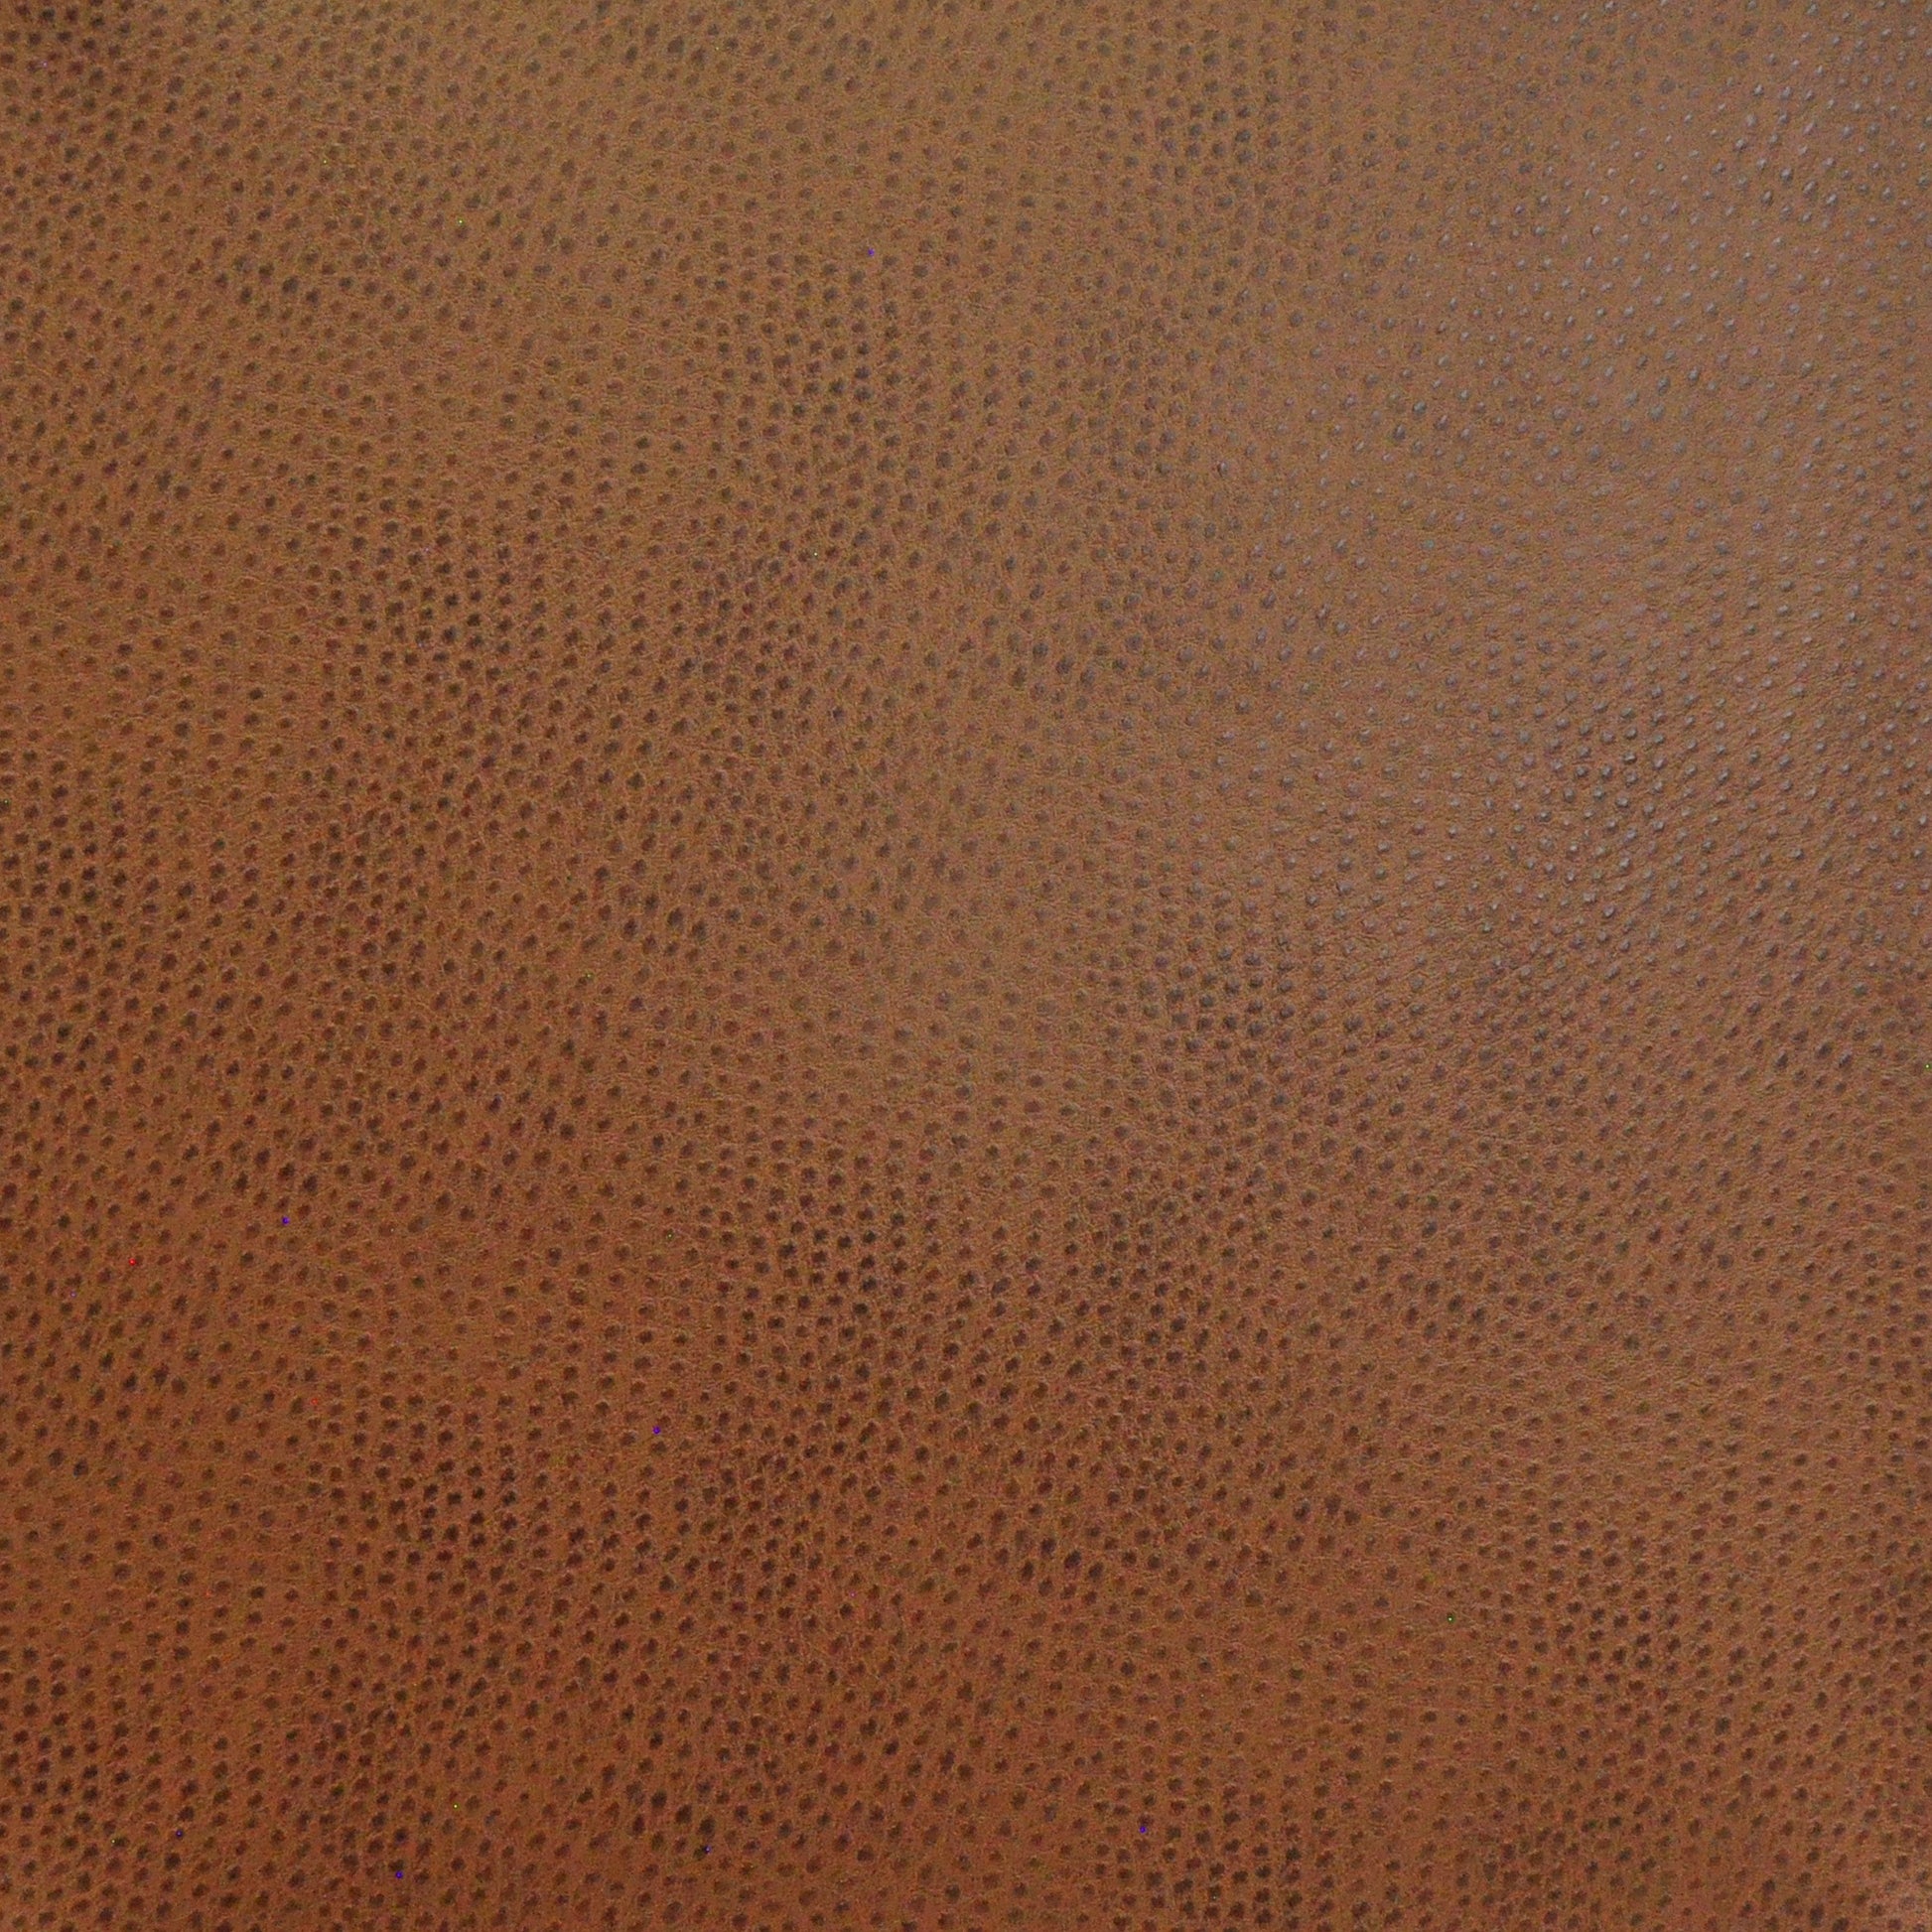 Purchase Maxwell Fabric - Buckeye, # 714 Pecan